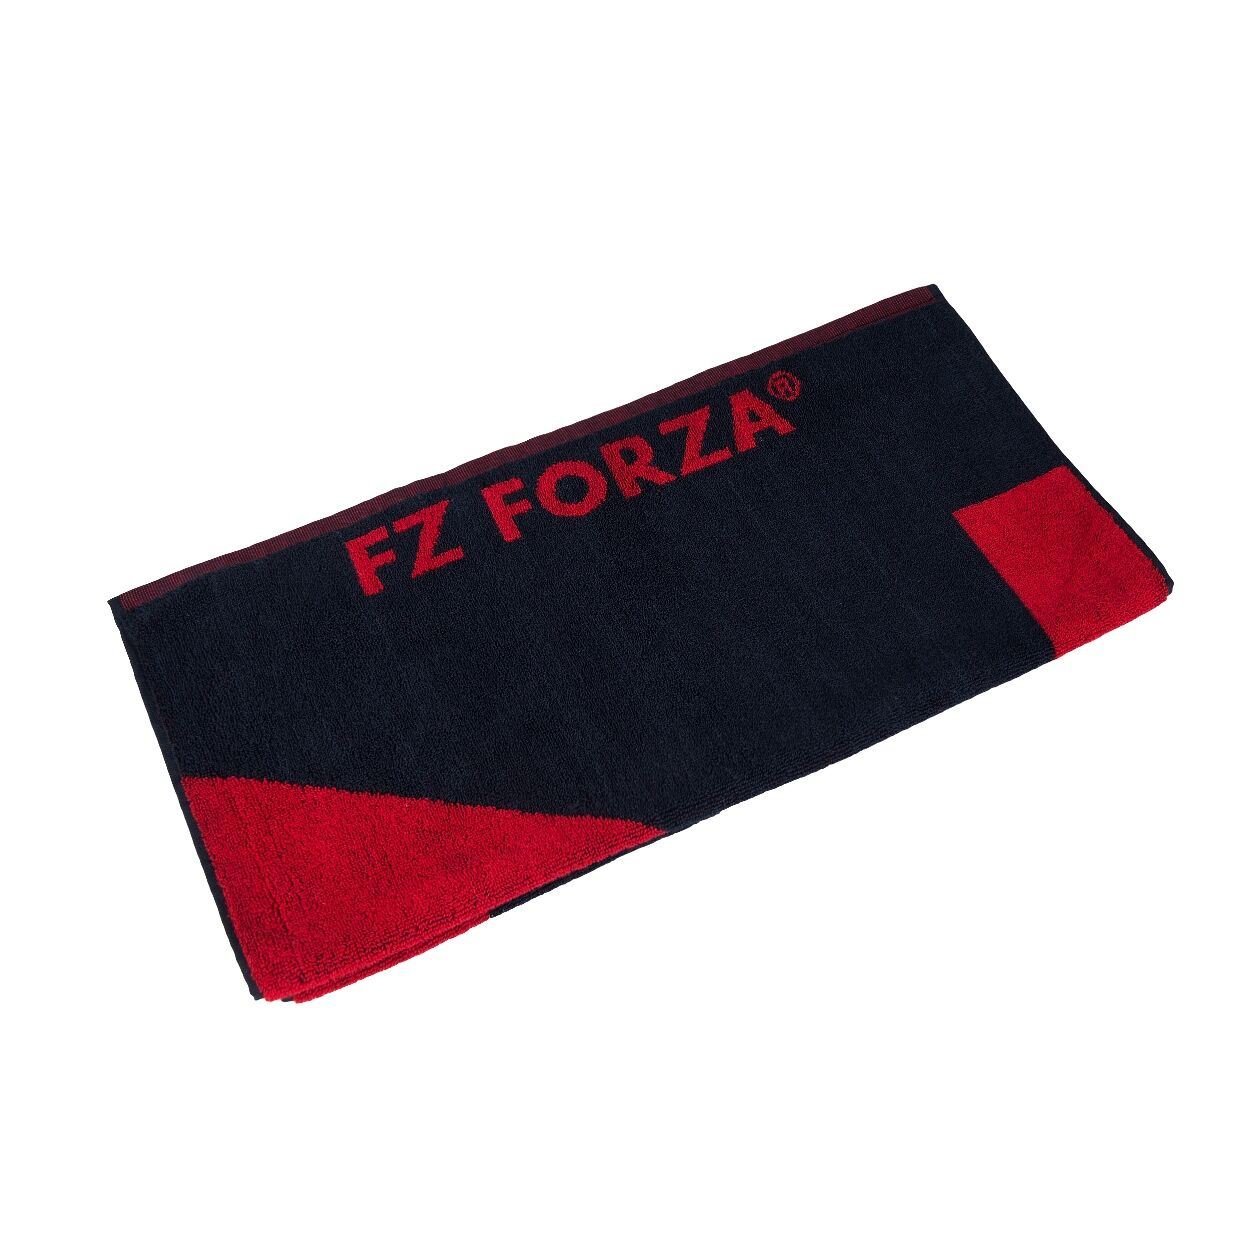 FZ FORZA Mick Towel Black